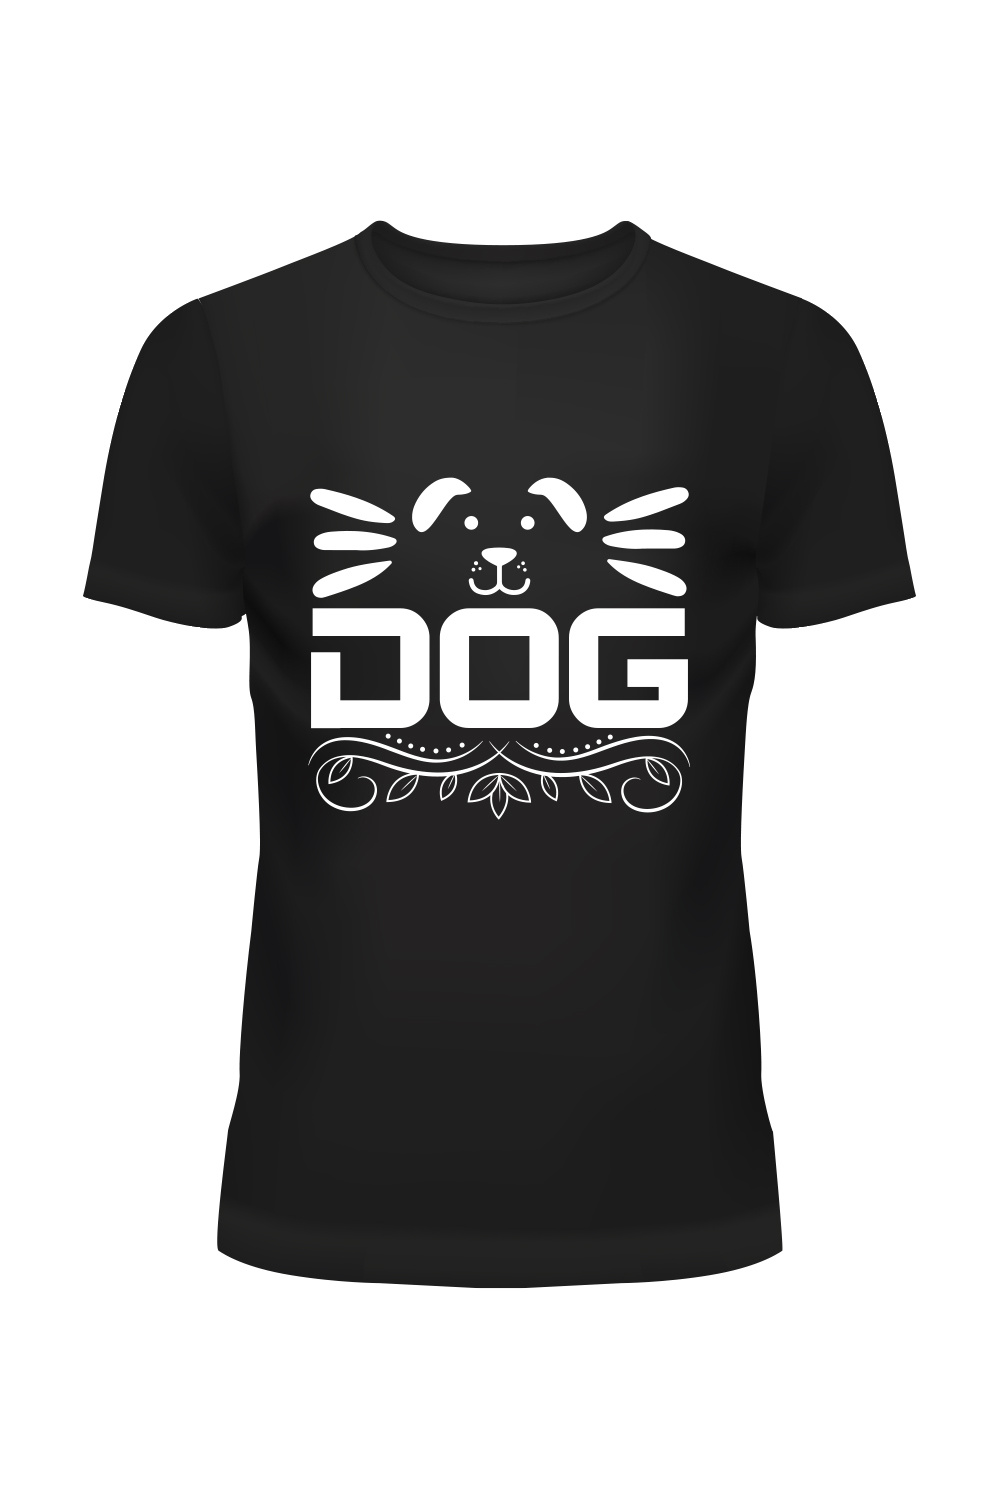 Dog T-shirt design pinterest preview image.